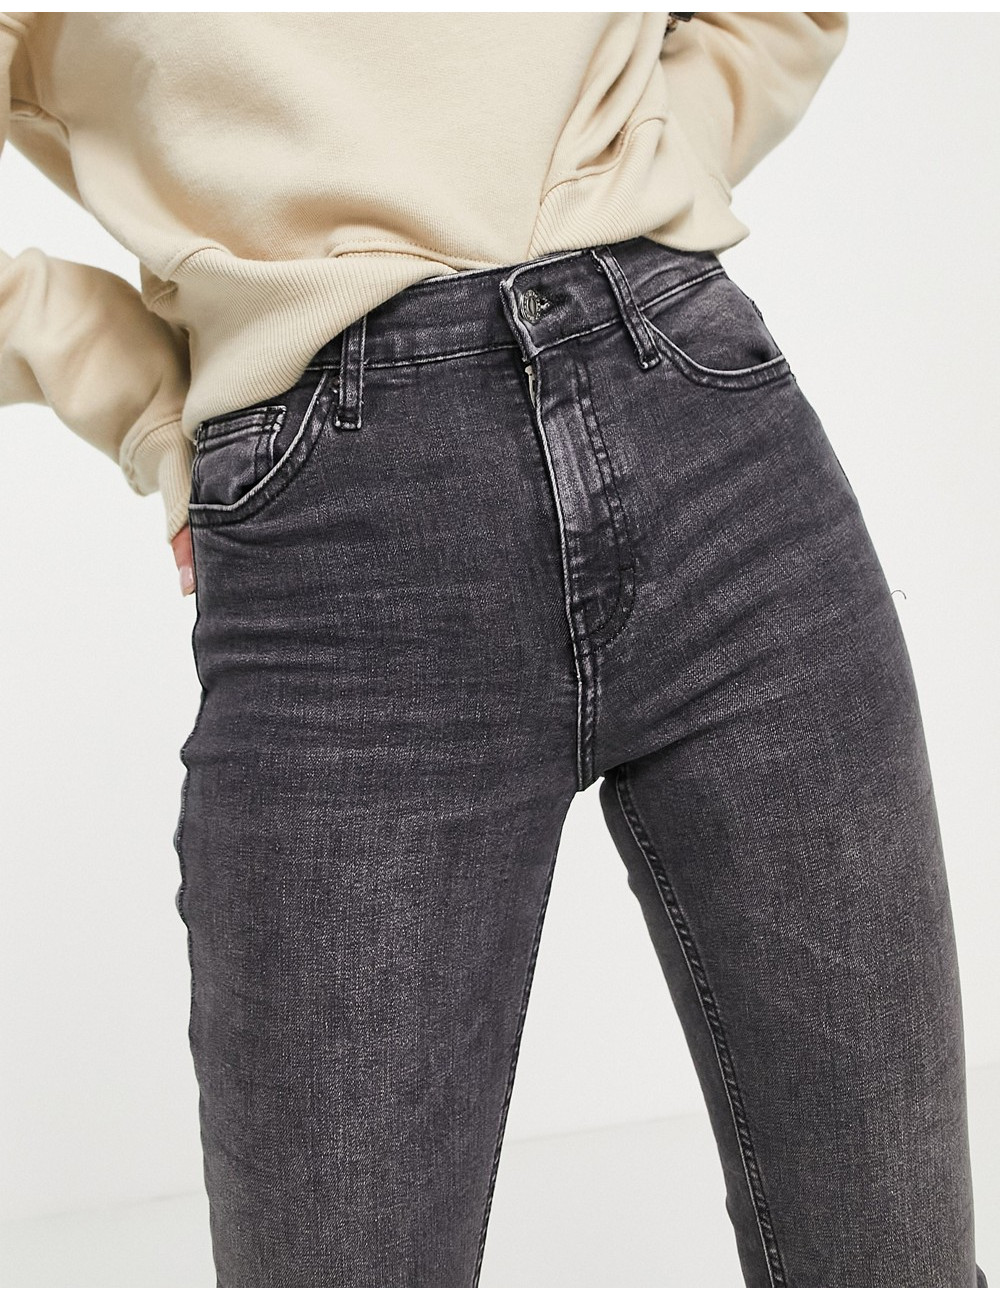 Topshop Petite Jamie jeans...